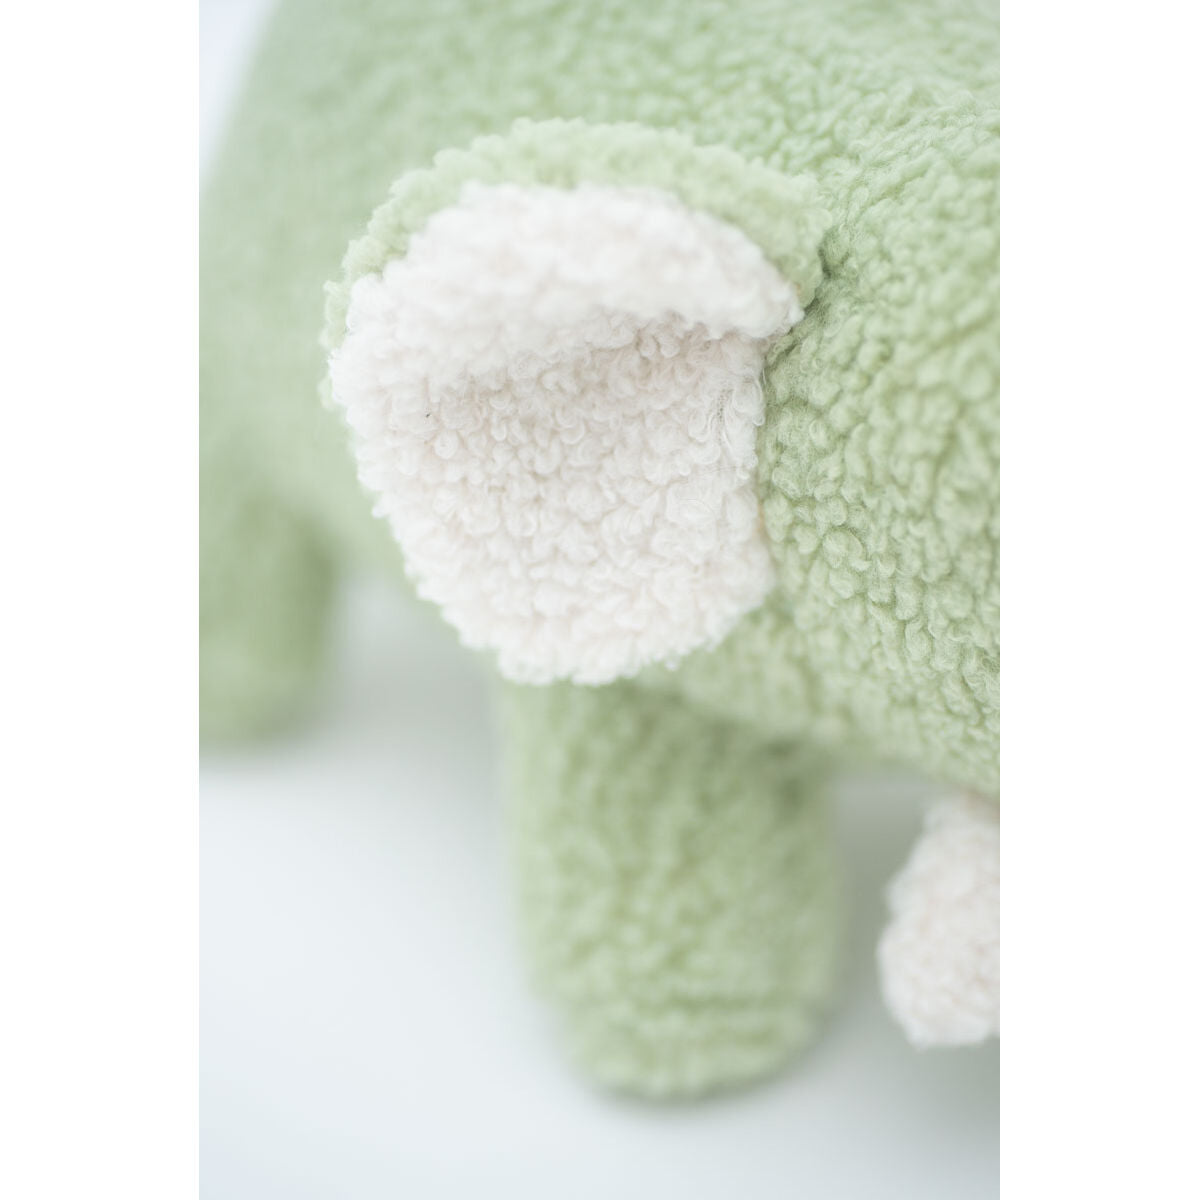 Fluffy toy Crochetts Bebe Green Elephant 27 x 13 x 11 cm 2 Pieces